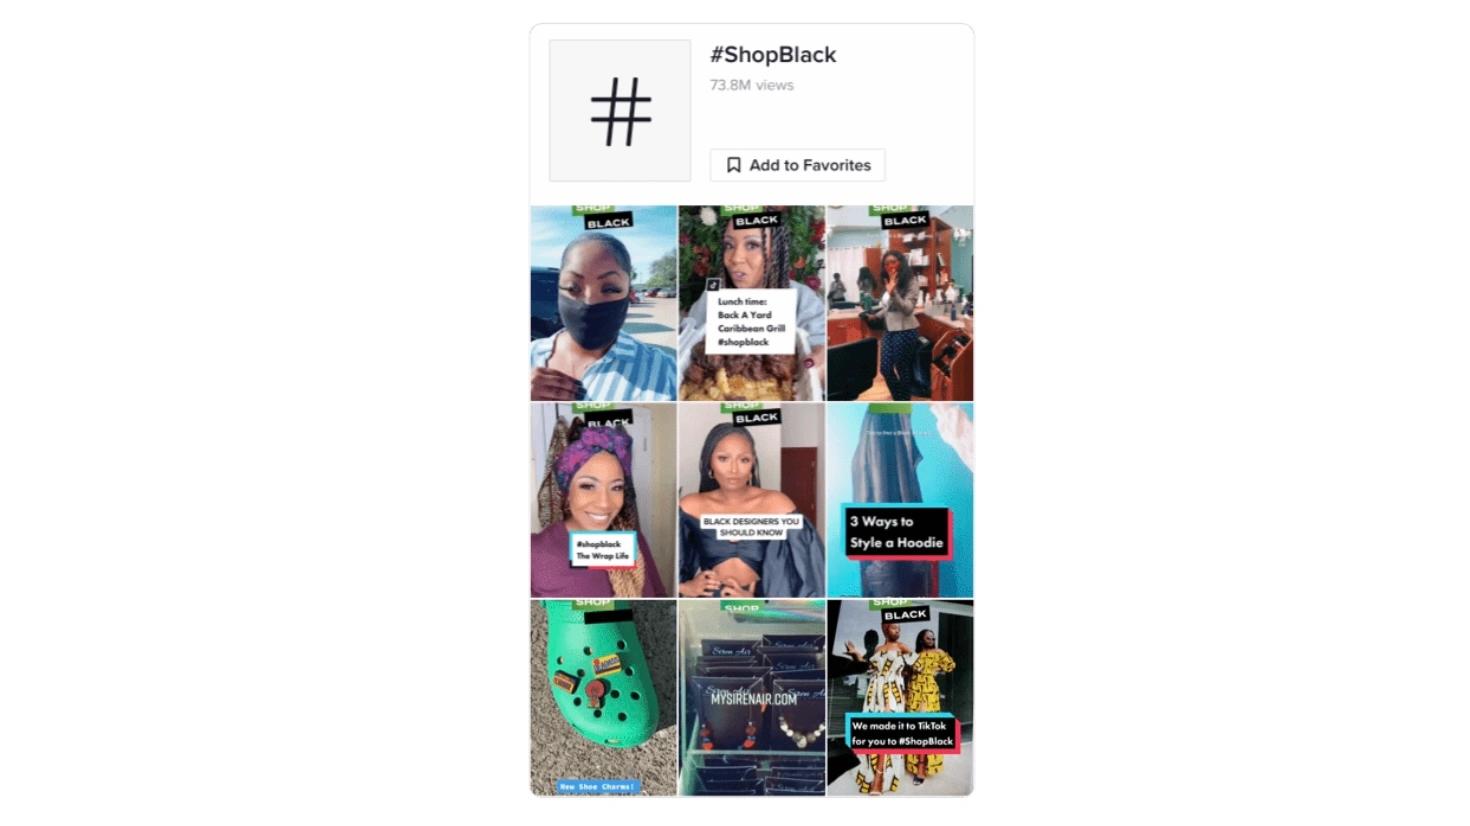 Example of TikTok brand hashtag challenge